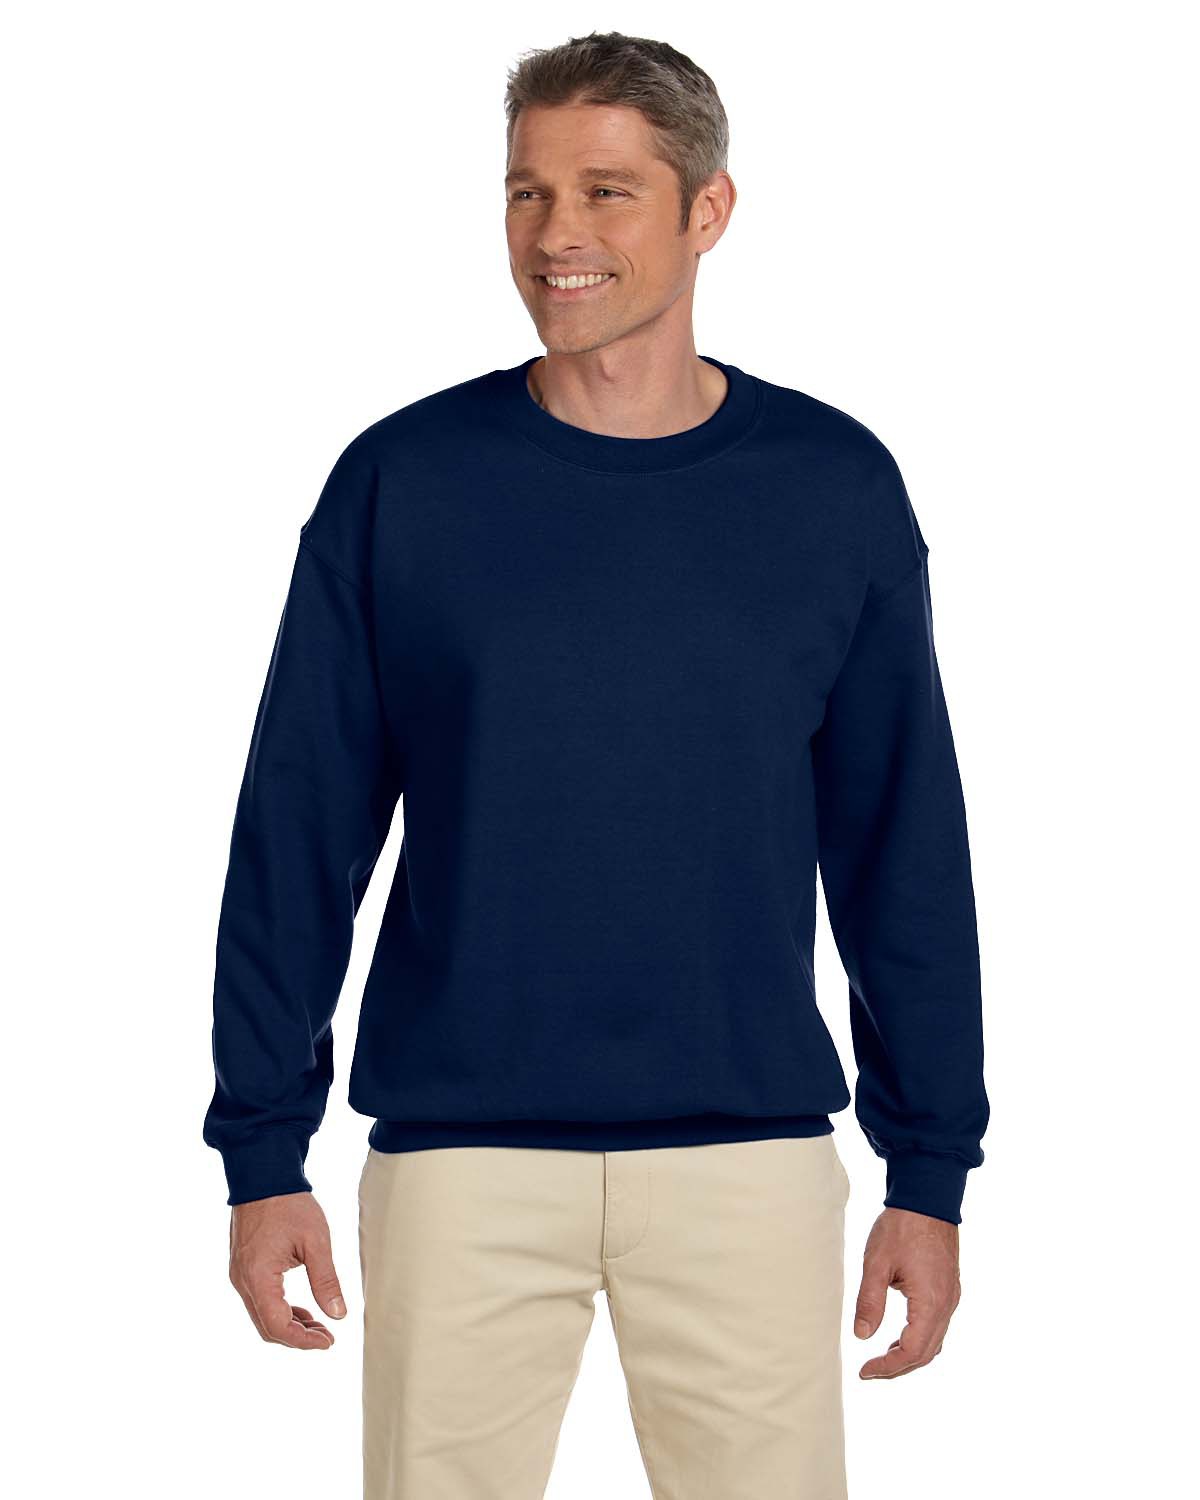 Jerzee Crewneck Sweatshirt with logo option